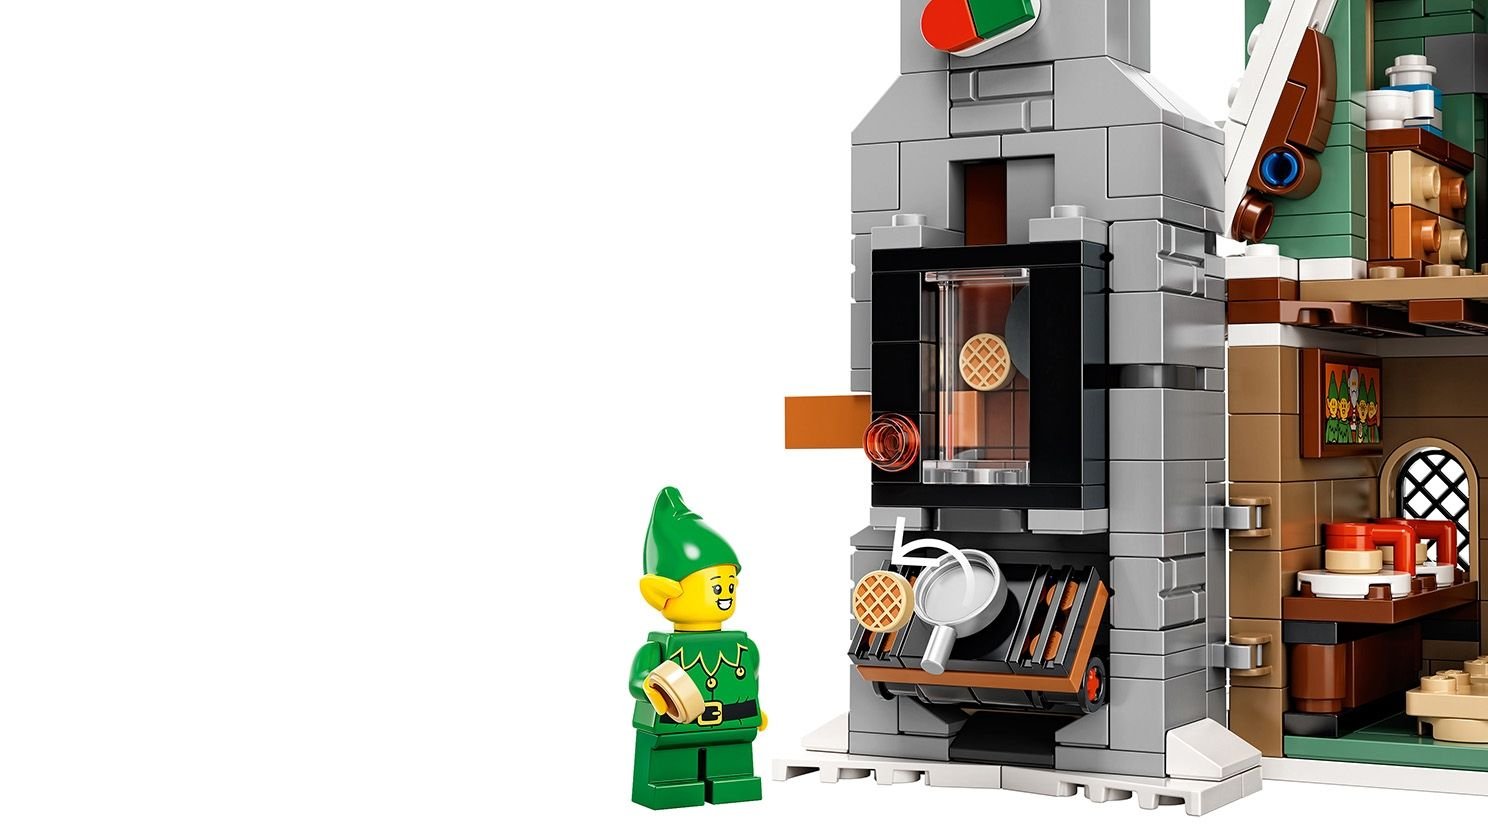 LEGO Advanced Models 10275 Winterliches Elfen Klubhaus LEGO_10275_WEB_SEC06_1488_white.jpg